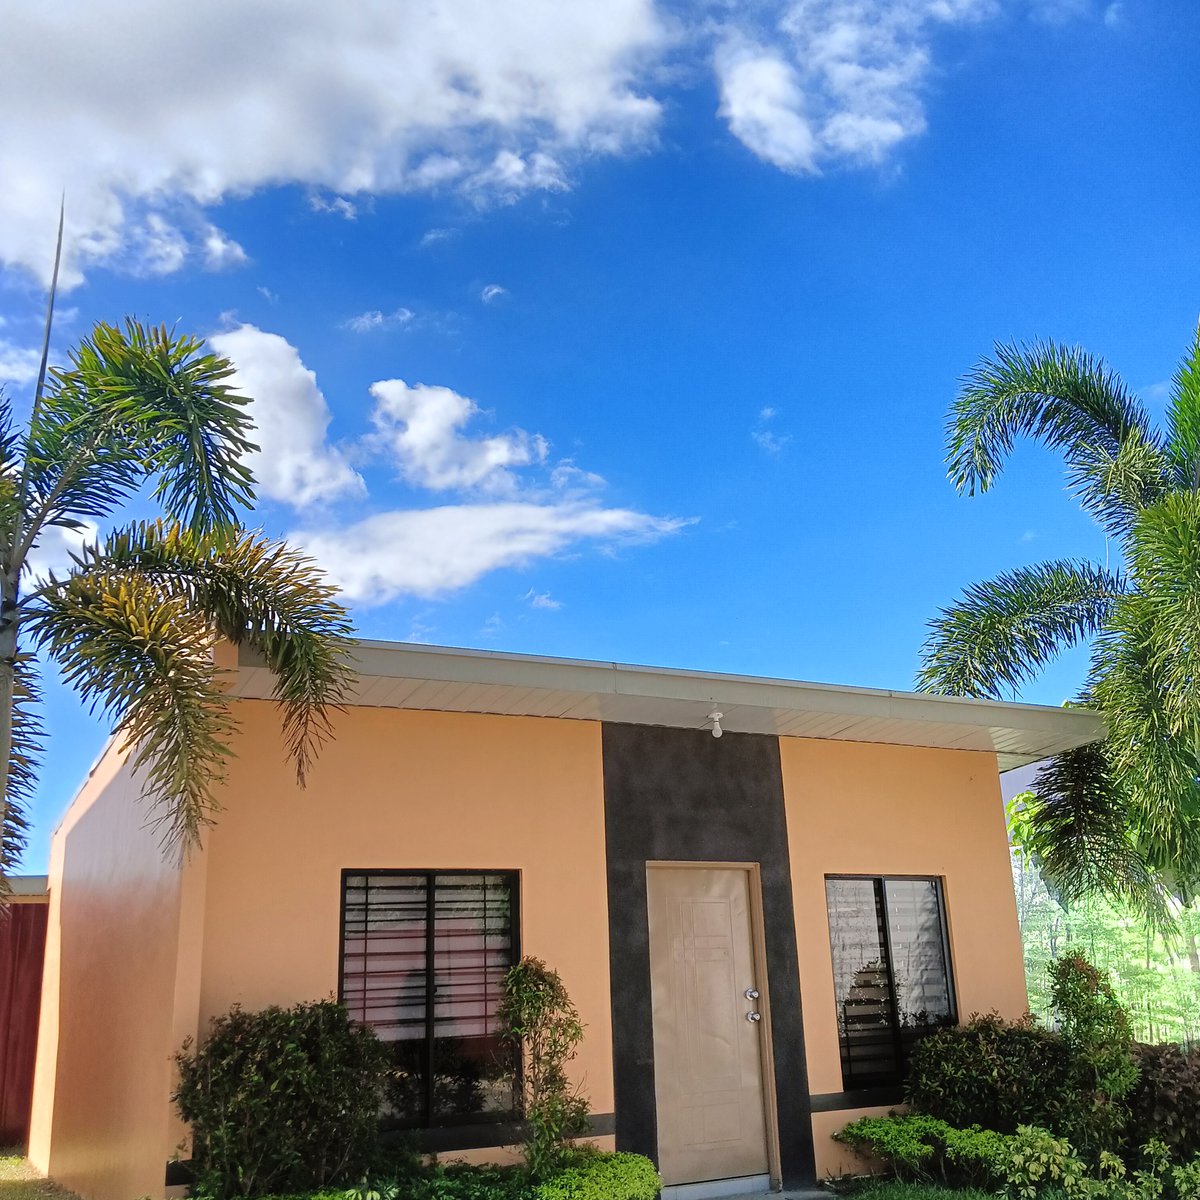 2-bedroom Duplex / Twin House For Sale in Santa Cruz Laguna